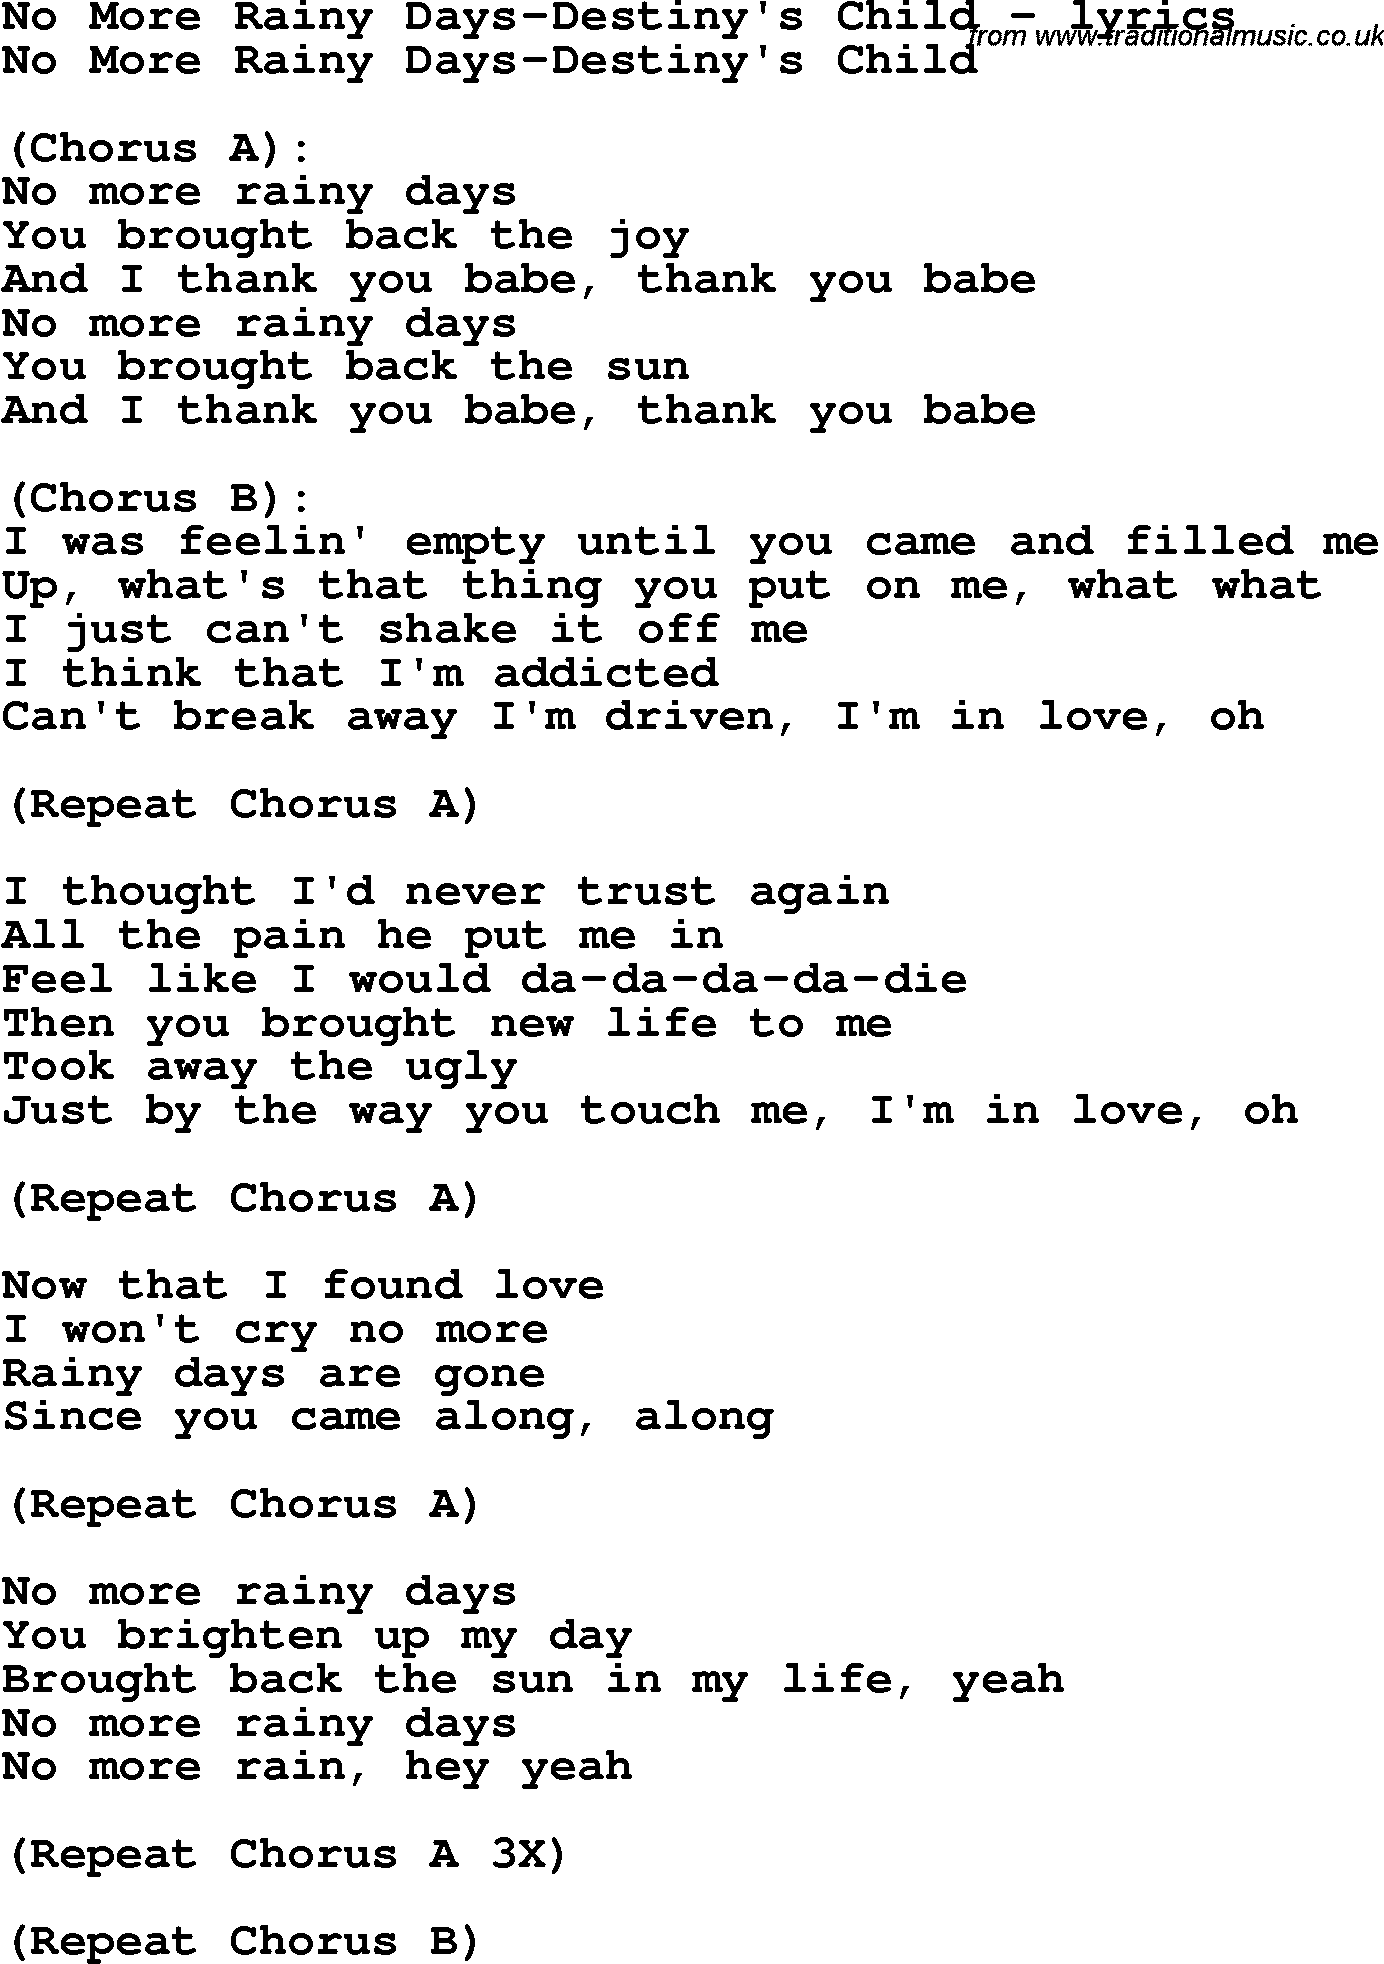 Love Song Lyrics for:No More Rainy Days-Destiny's Child